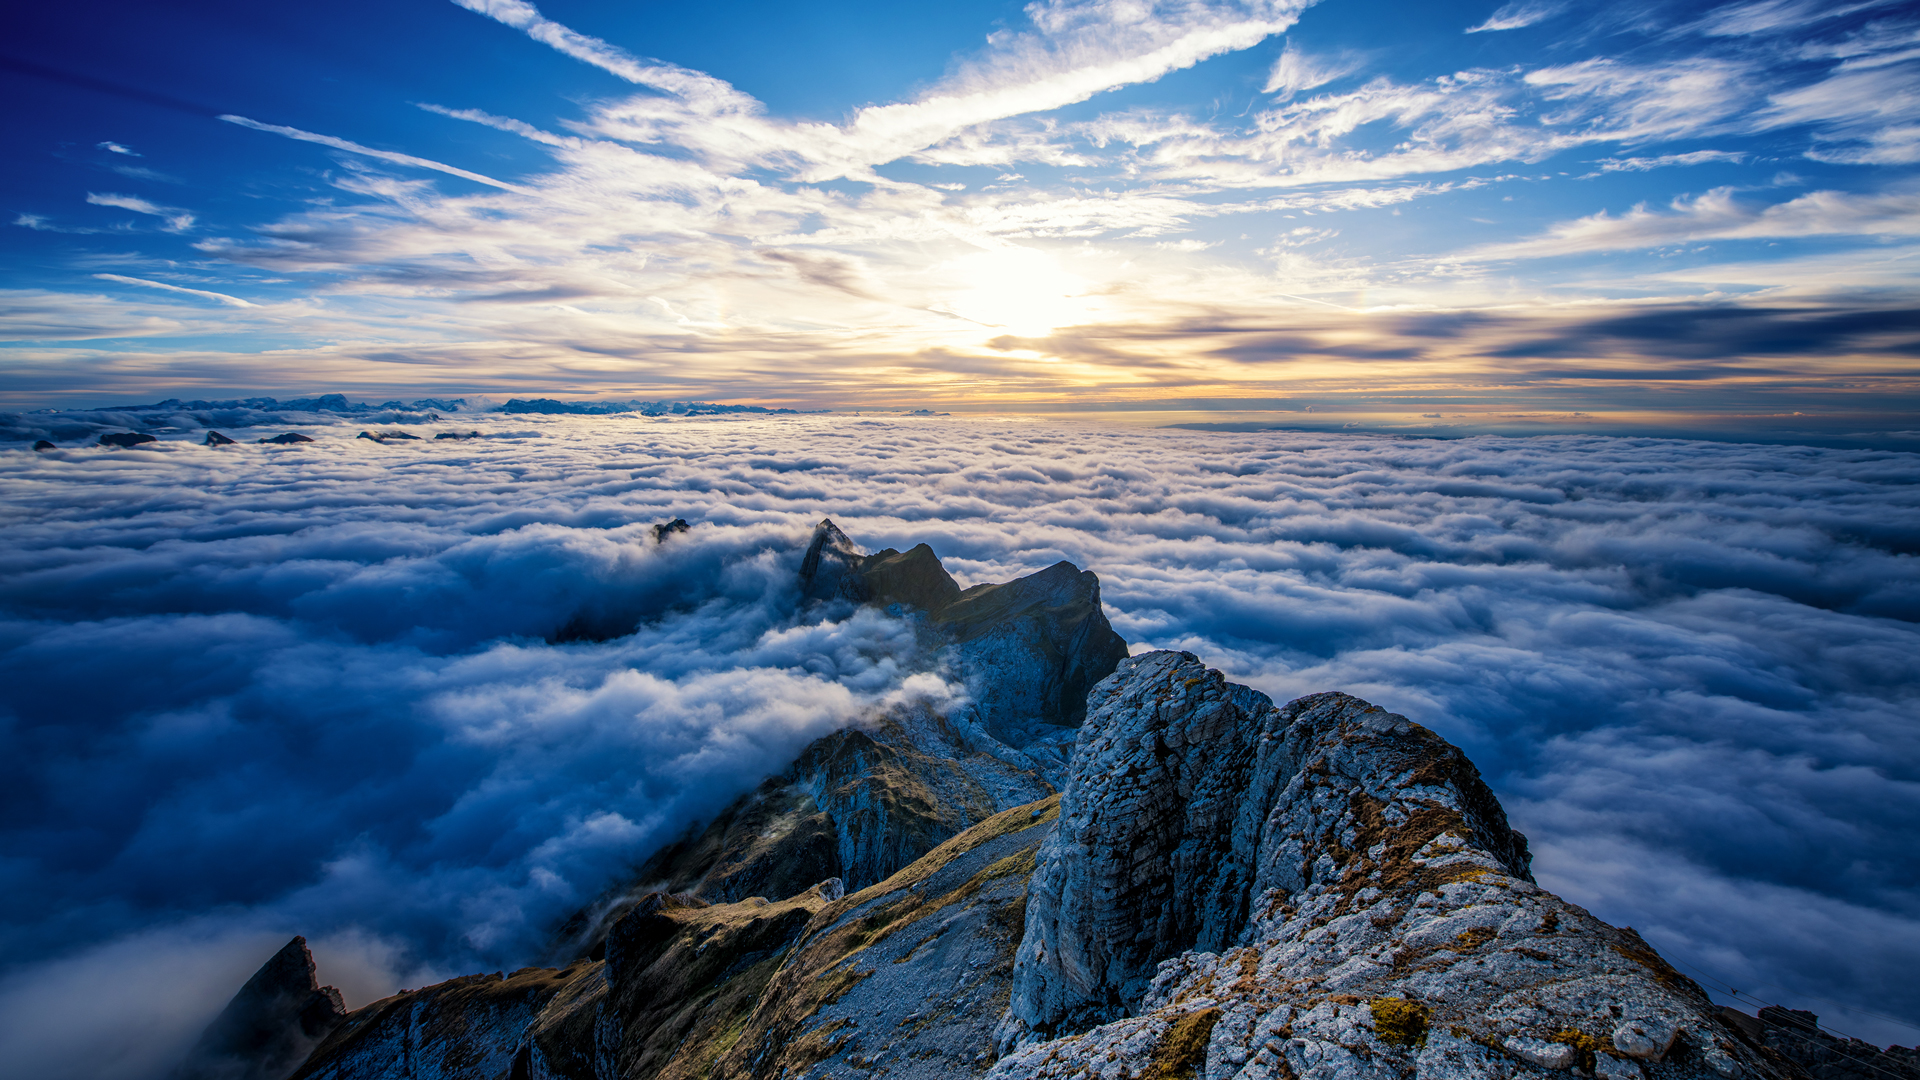 General 1920x1080 clouds Switzerland Alps Dominic Kamp nature horizon rocks sky sunlight outdoors